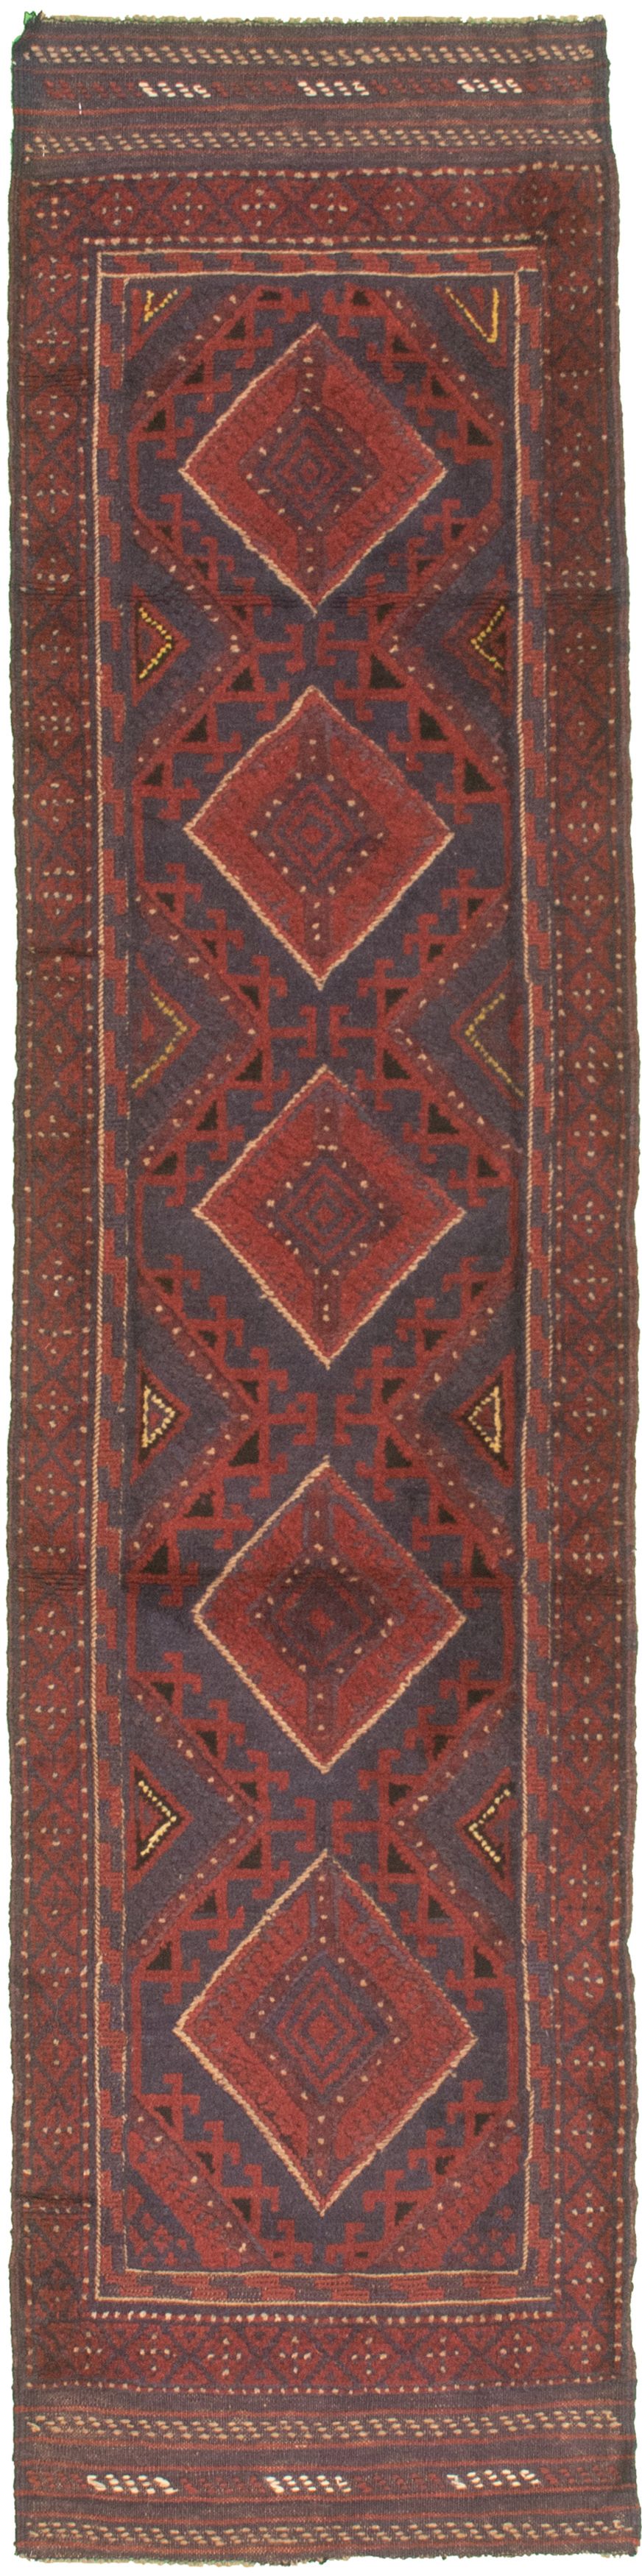 Hand-knotted Tajik Caucasian Red Wool Rug 2'1" x 8'6"  Size: 2'1" x 8'6"  